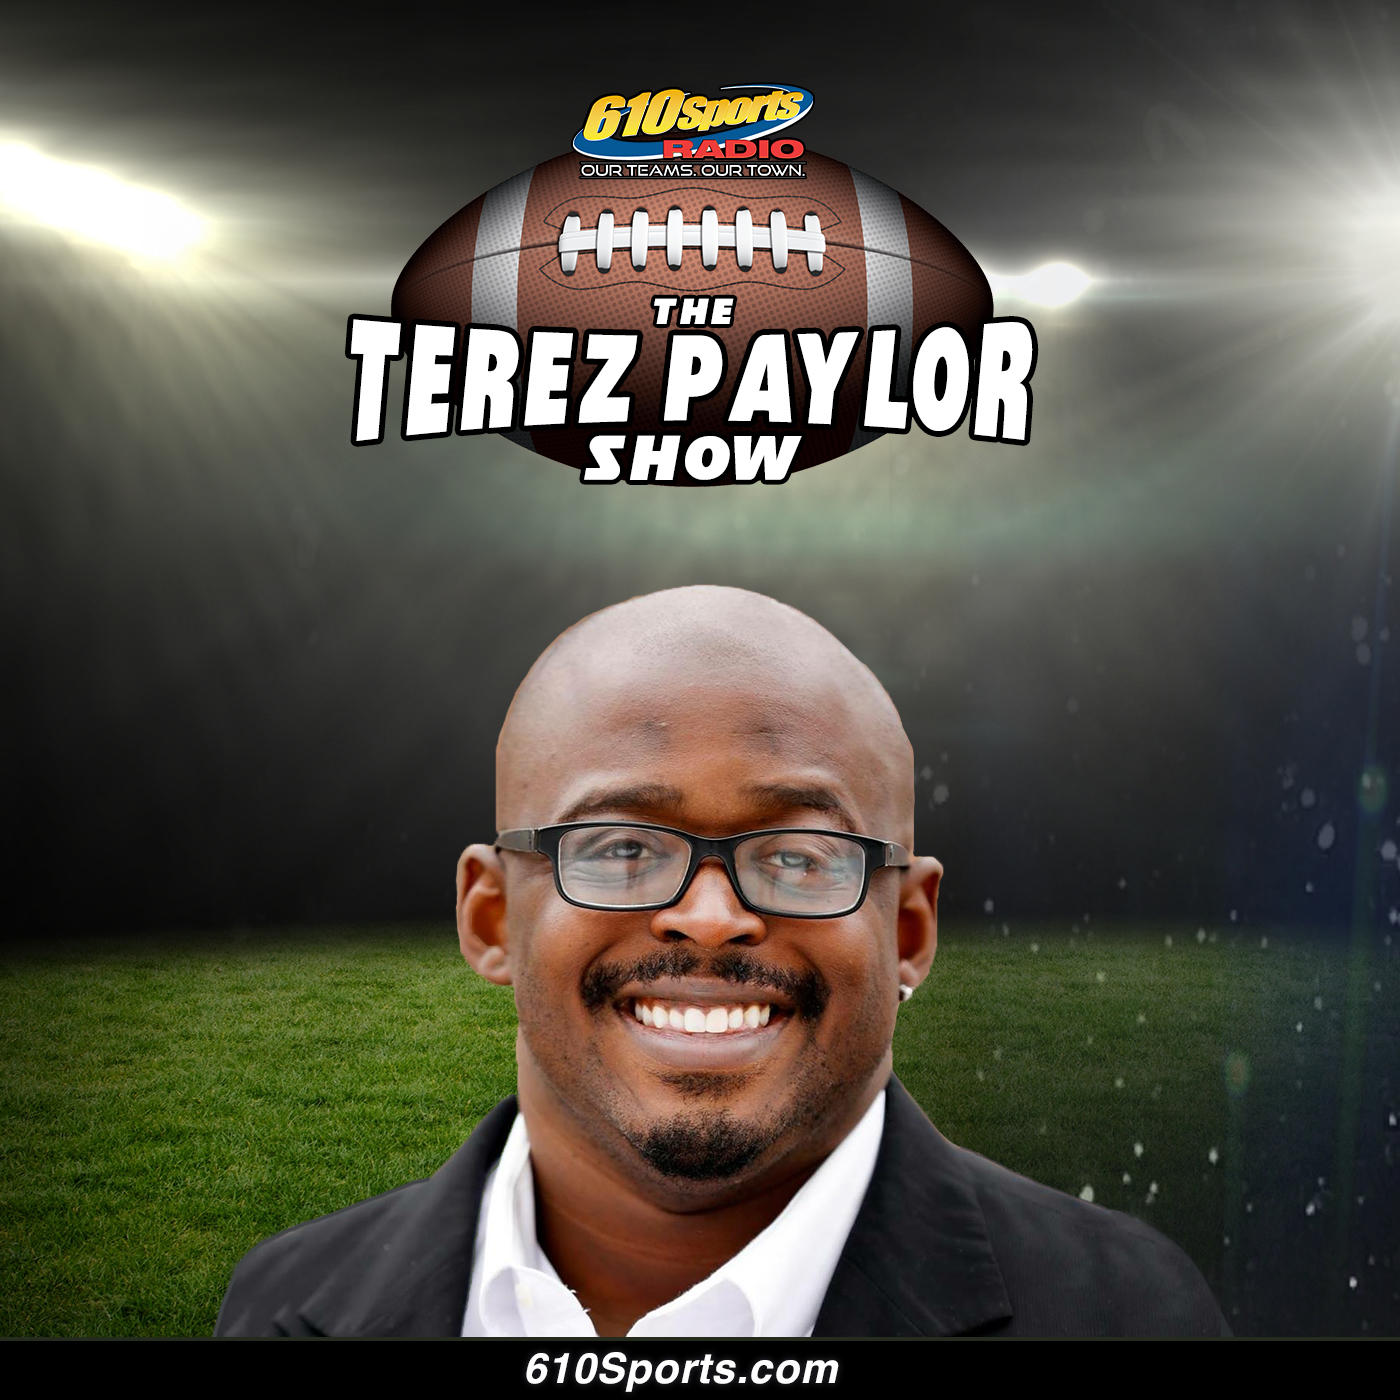 11/9/20 - The Terez Paylor Show